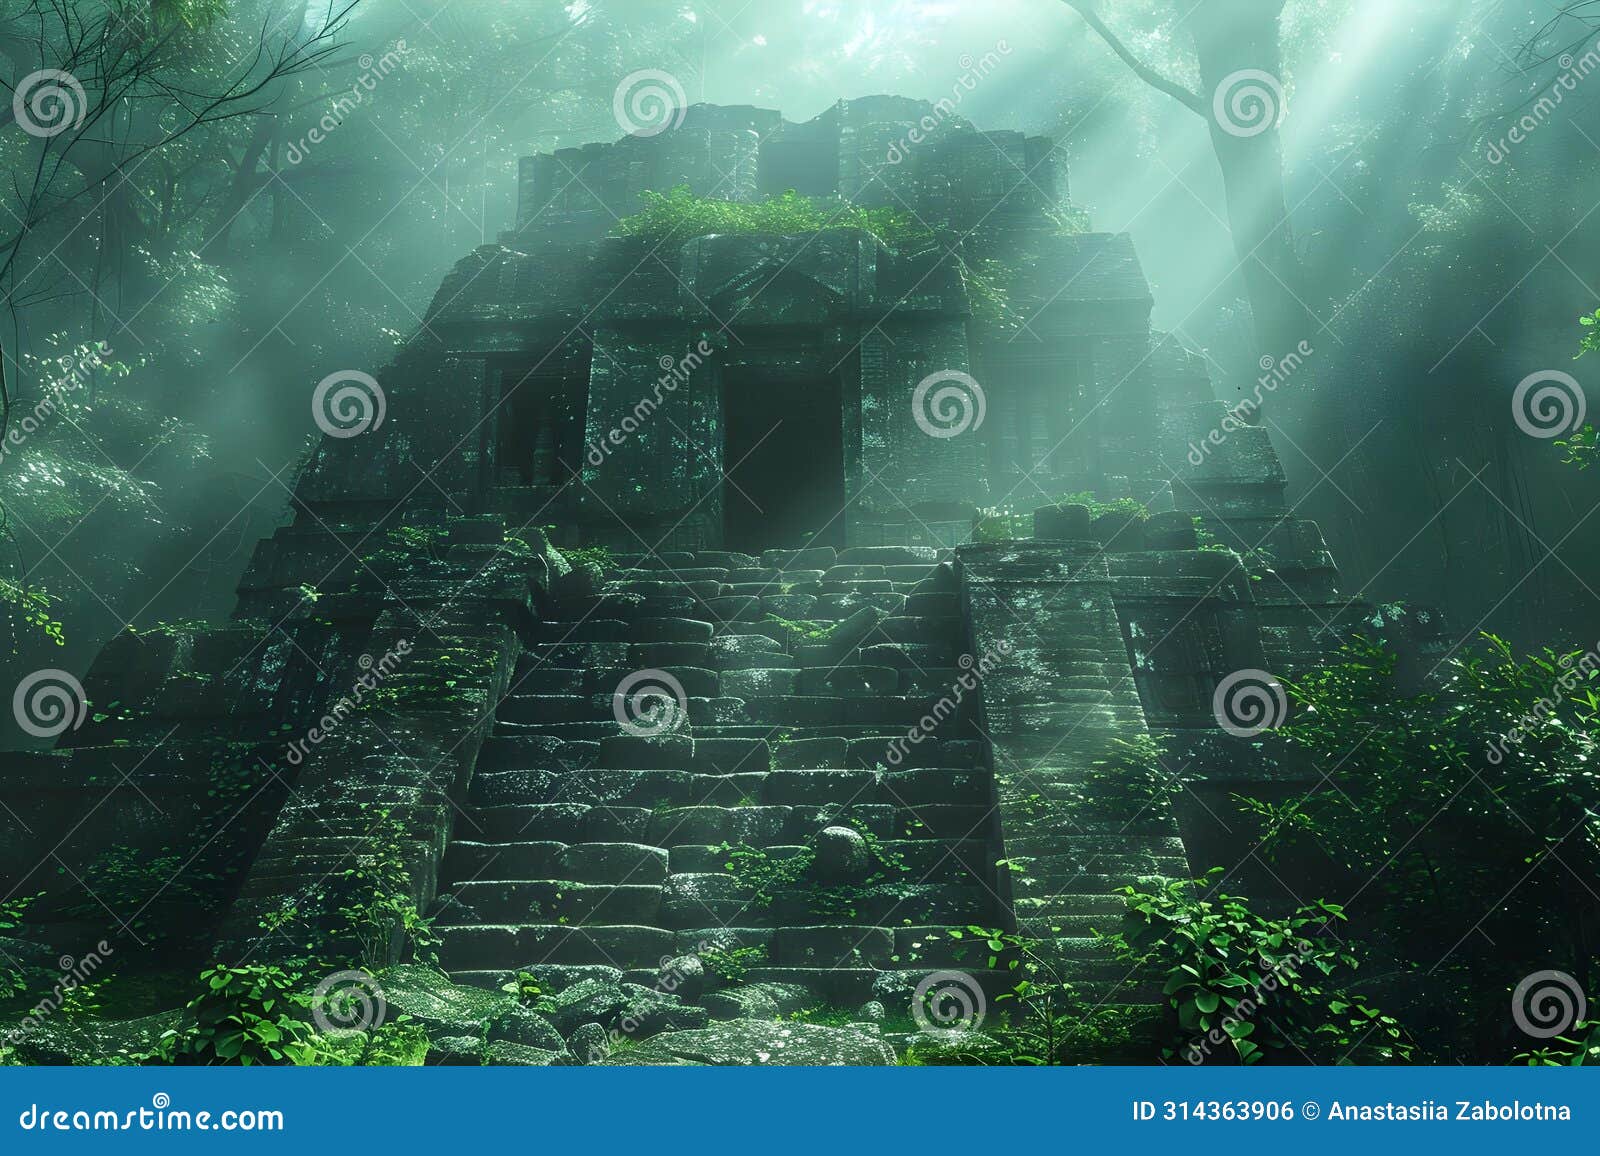 concept mystic mayan ruins, amazonian mists, mystic mayan ruins shrouded by amazonian mists